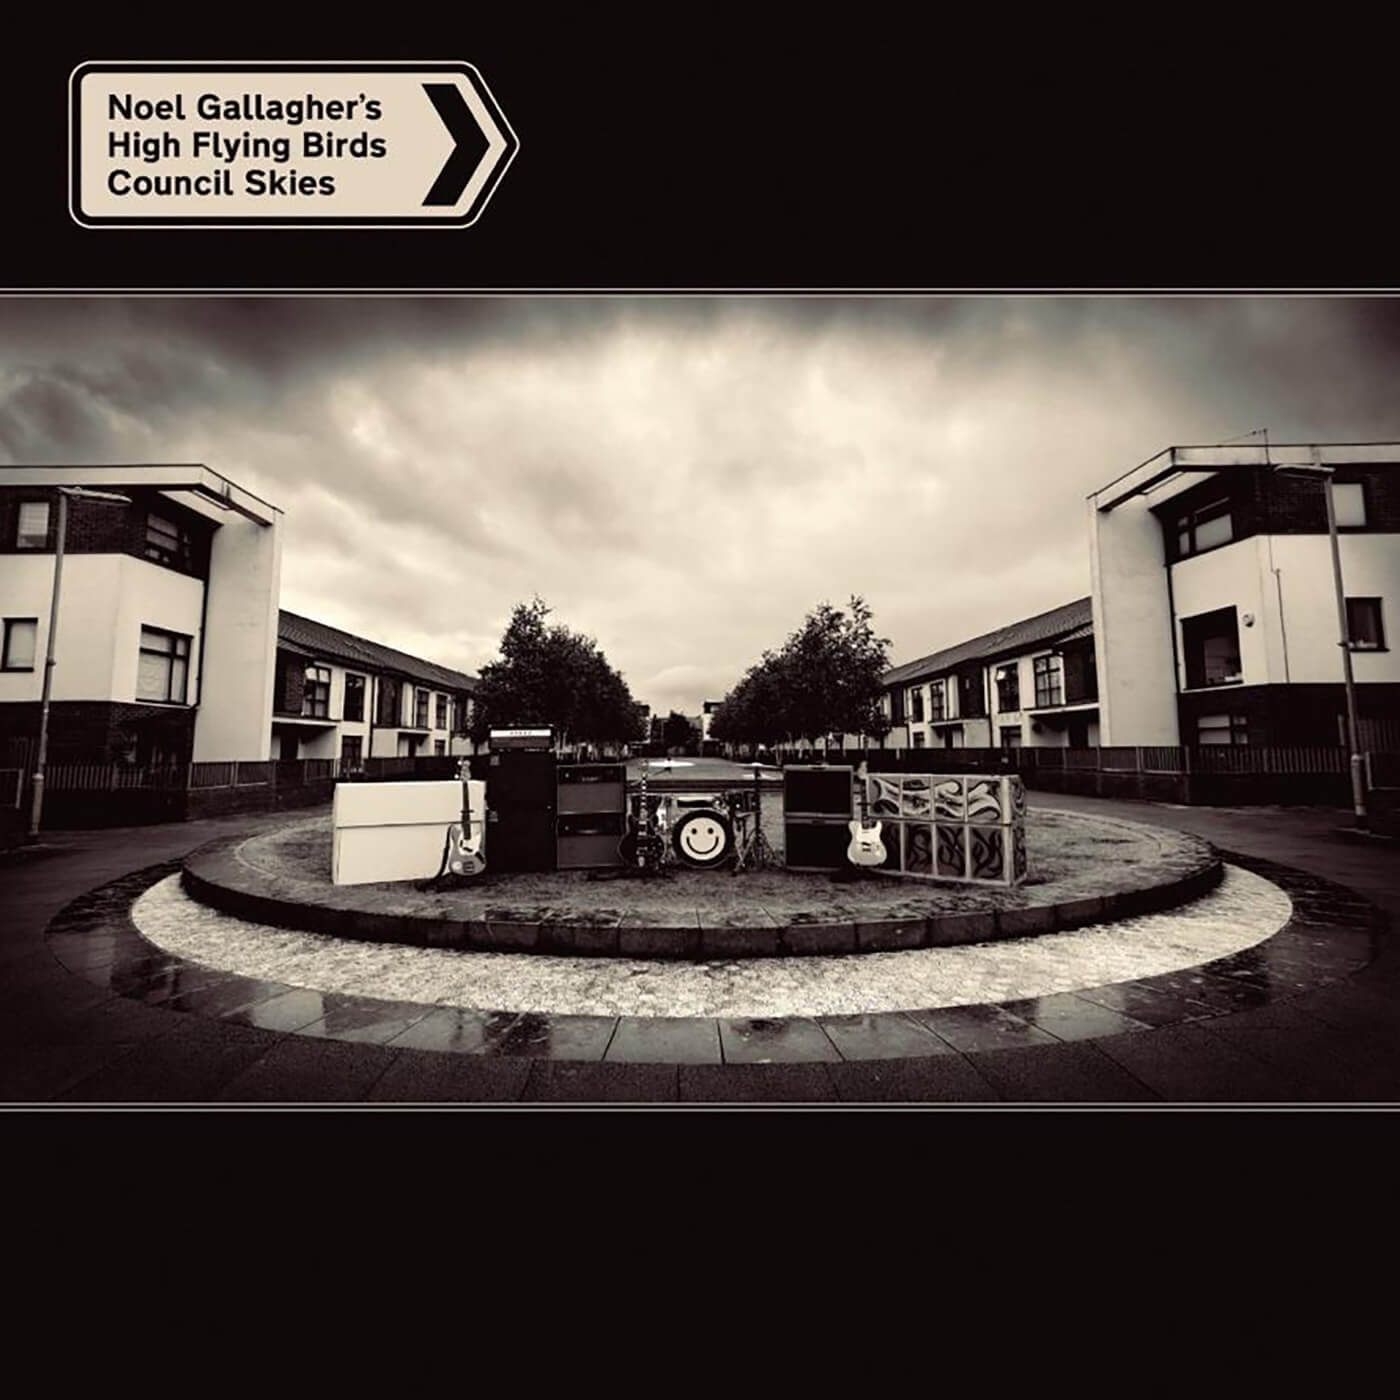 Noel Gallagher's High Flying Birds 'Council Skies' official album artwork